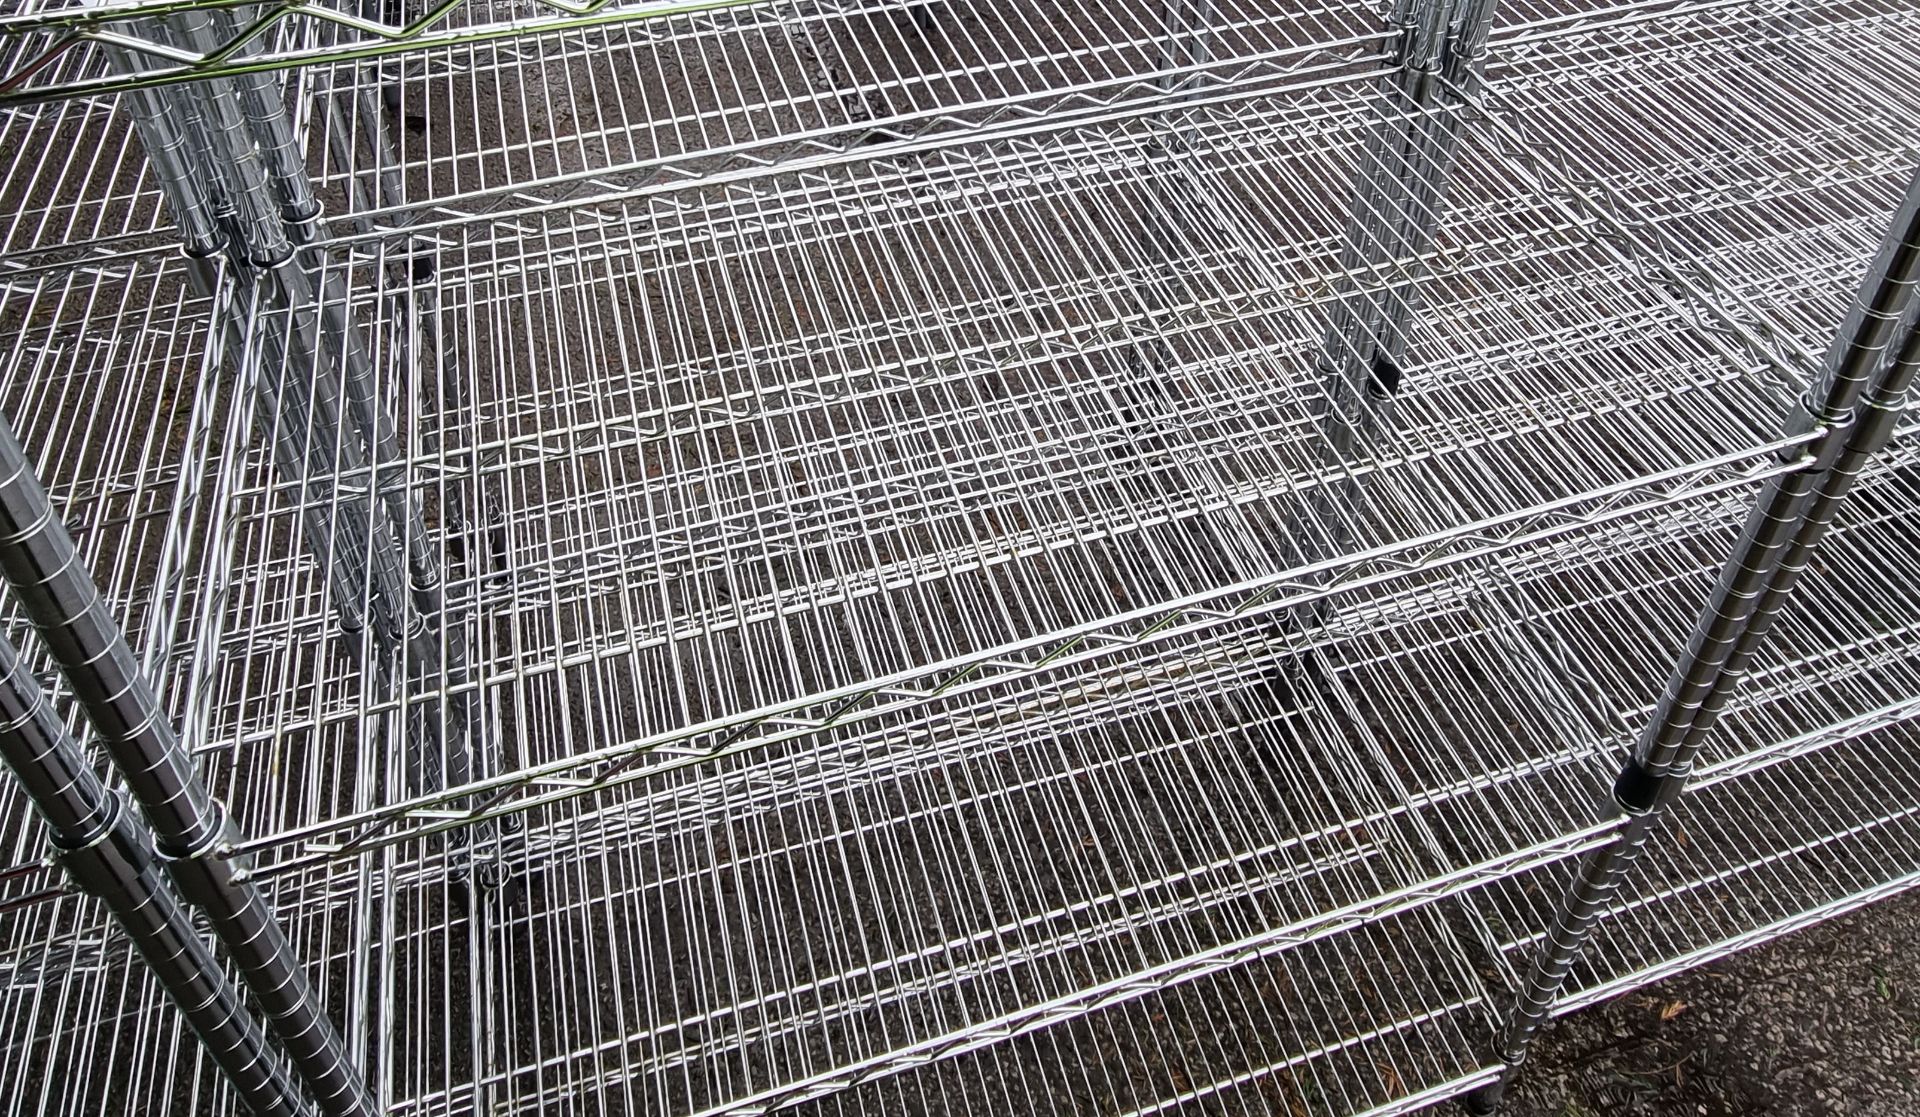 5 tier metal shelving unit - dimensions: 100 x 50 x 180cm - Image 2 of 2